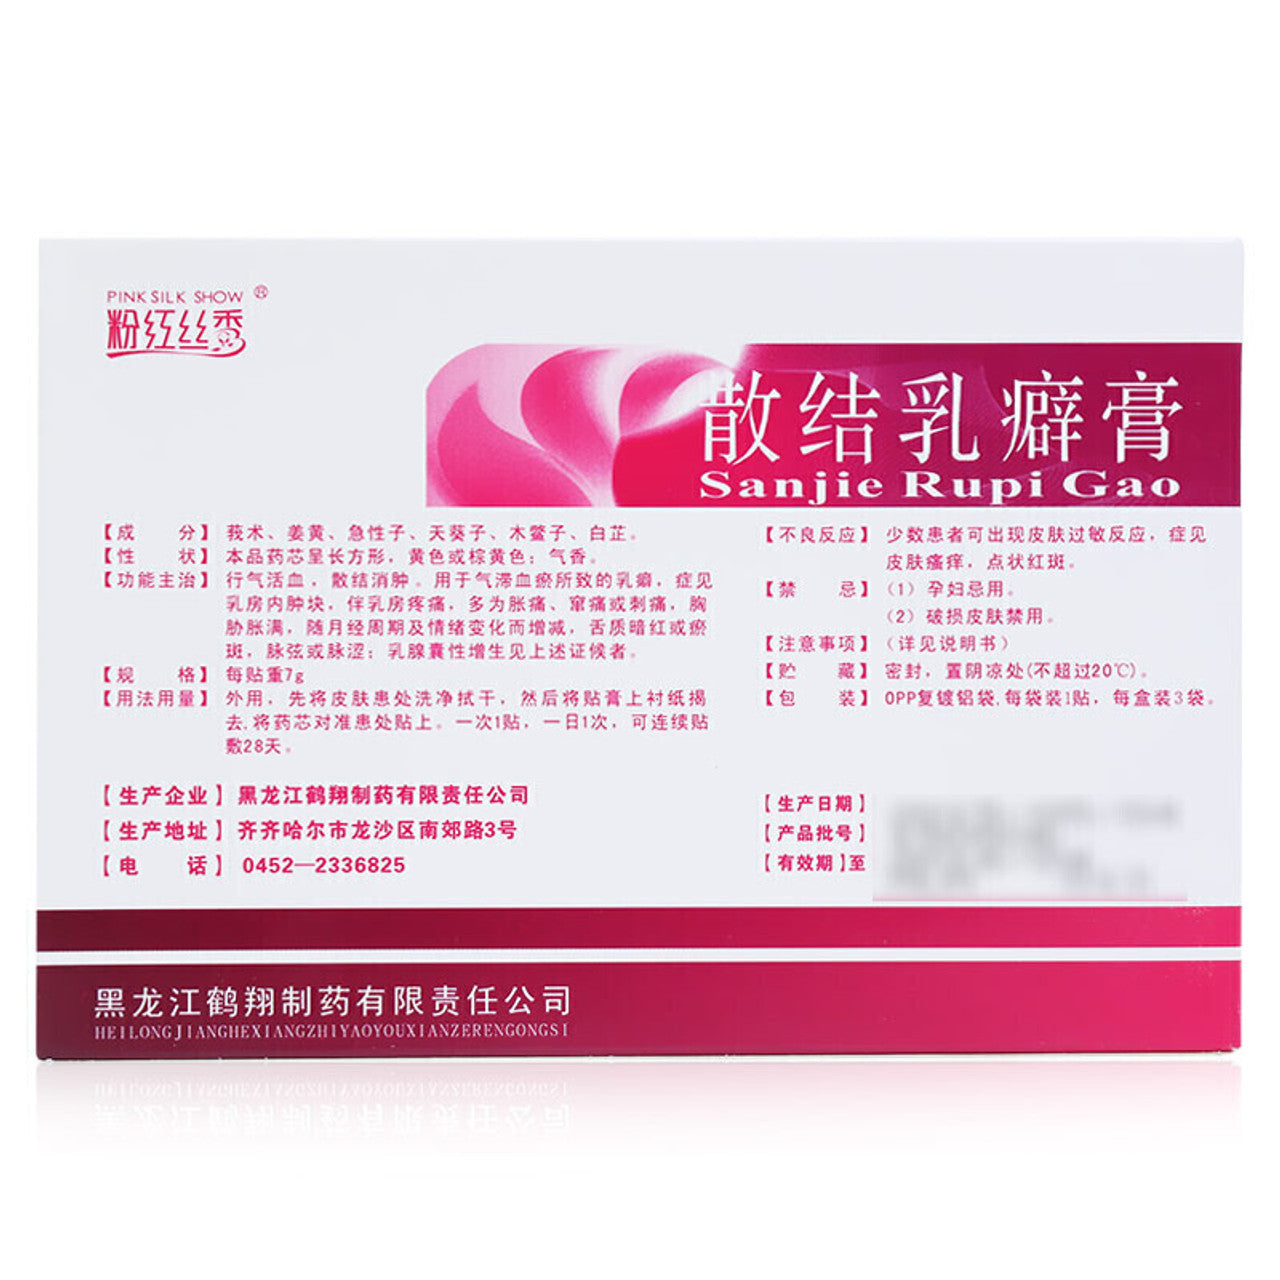 China Herb. External Use Plaster. Sanjie Rupi Gao or Sanjie Rupi Plaster for cystic hyperplasia of the breast. San Jie Ru Pi Gao